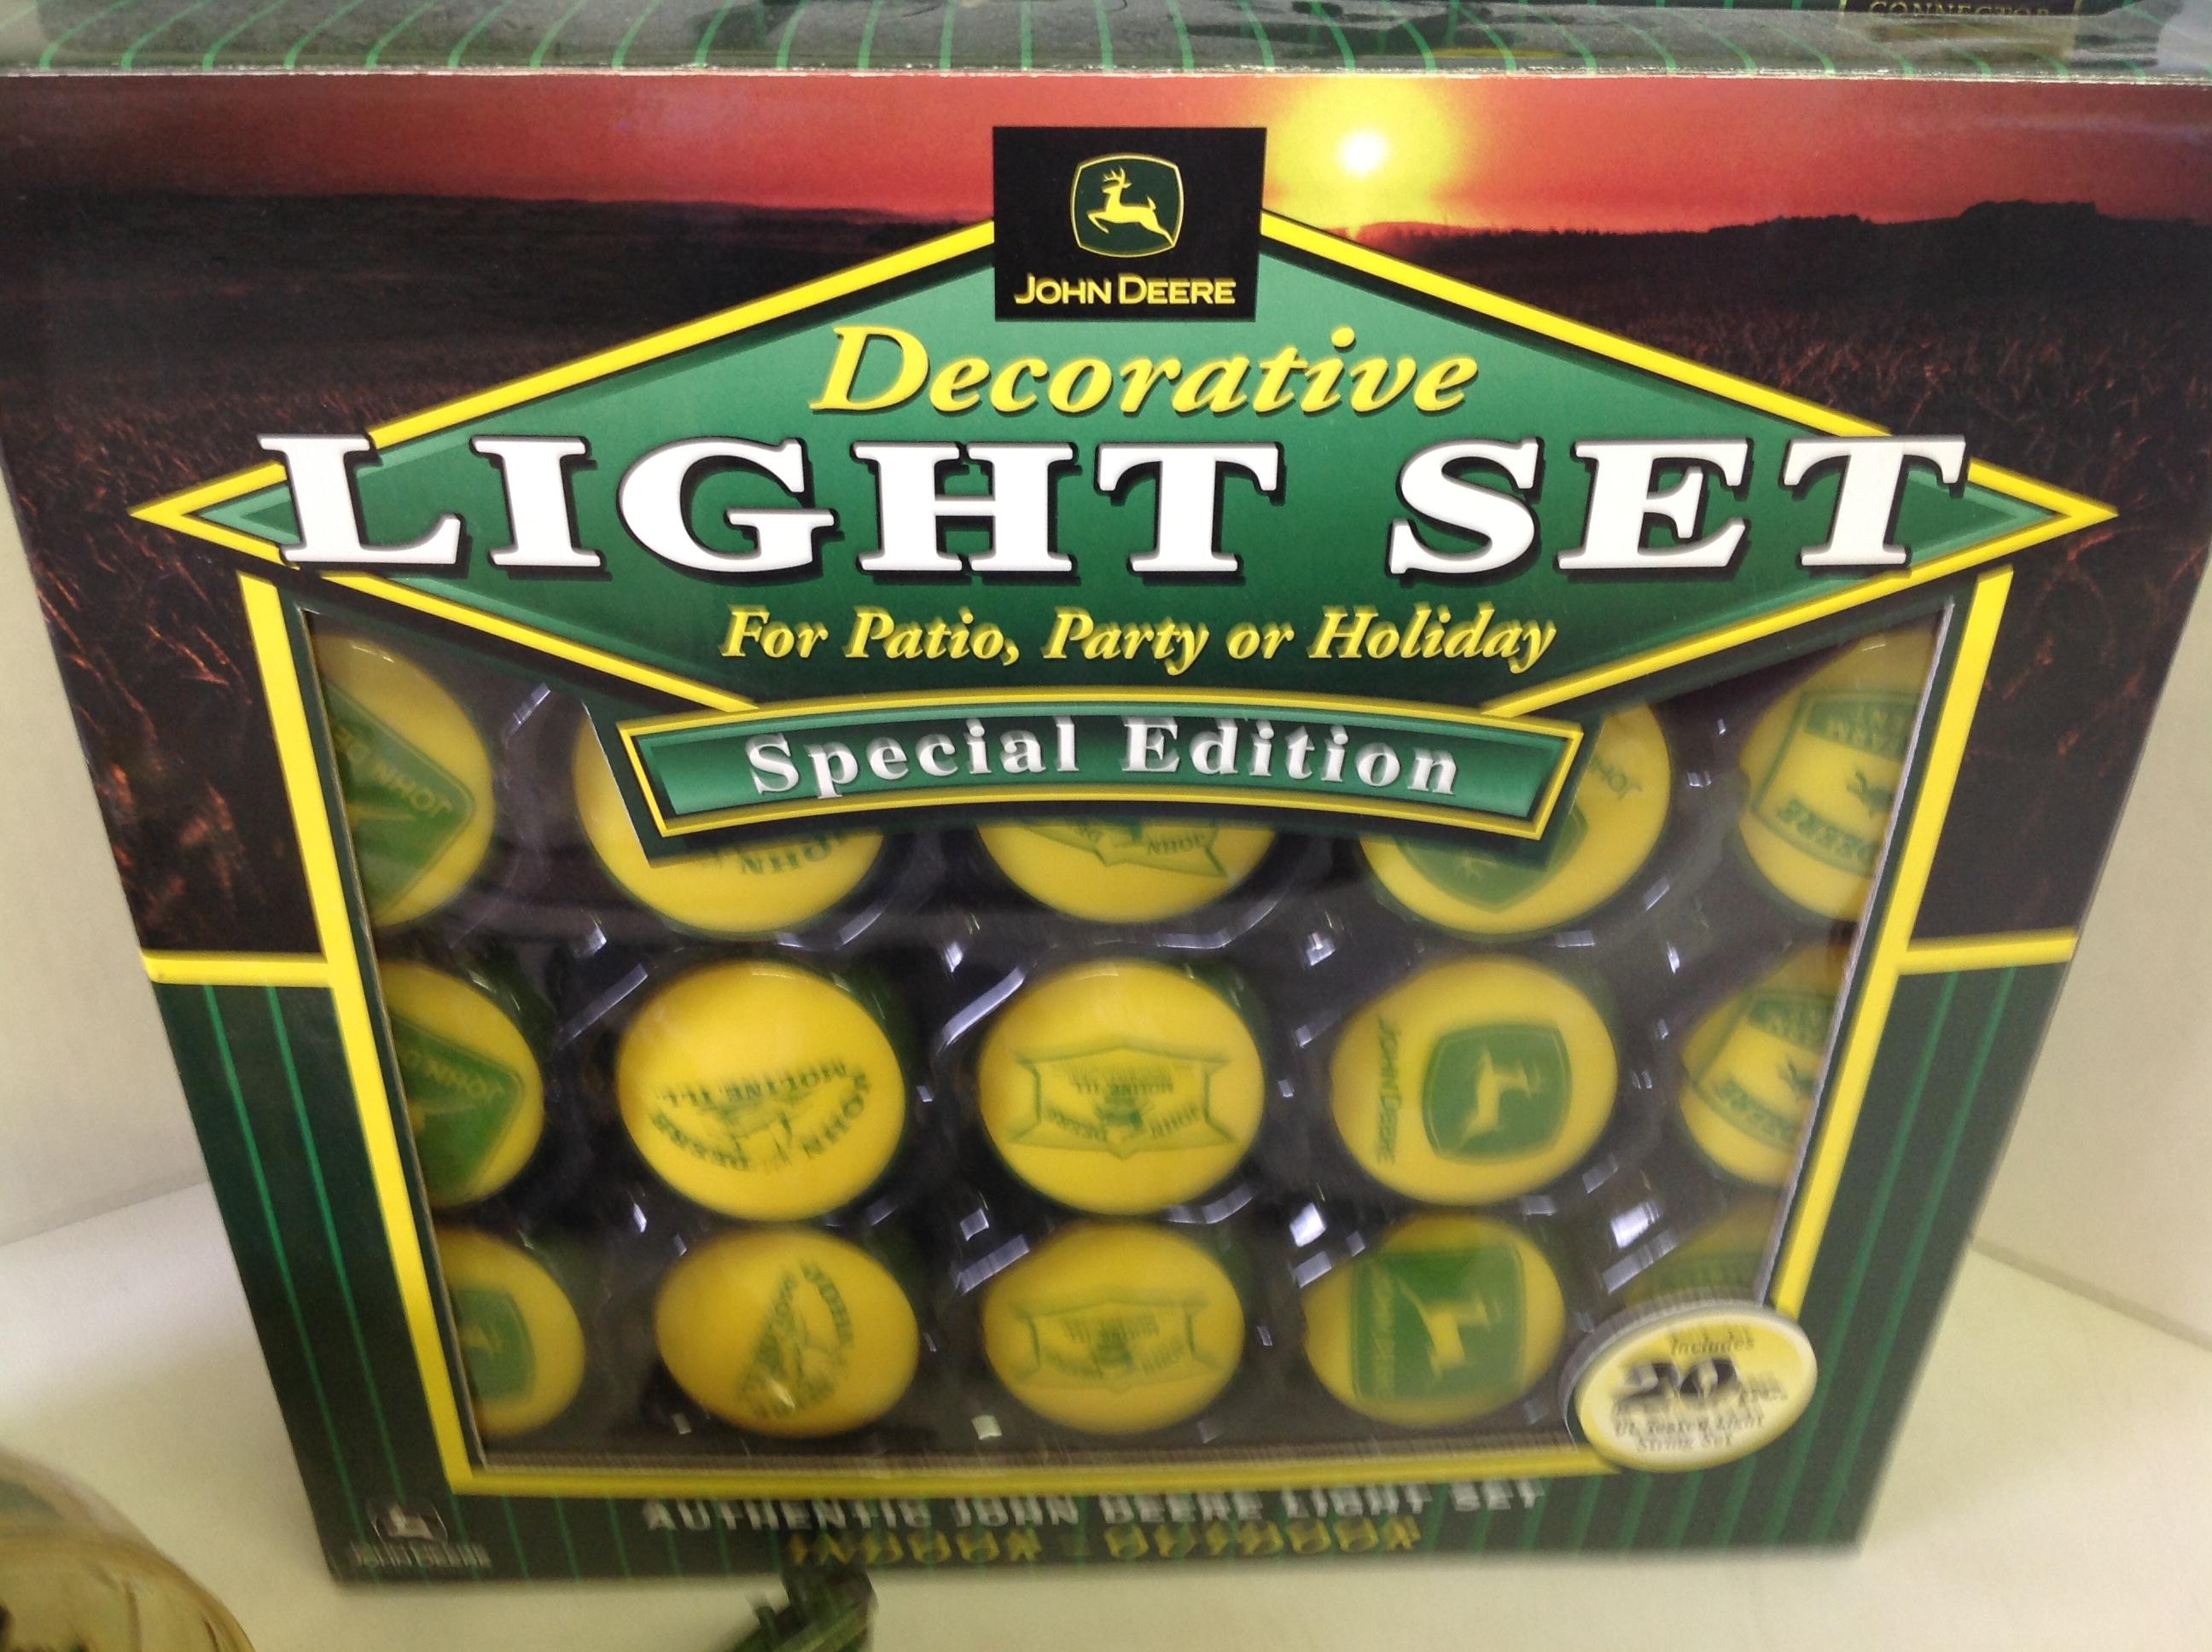 Decrorative John Deere Light set's